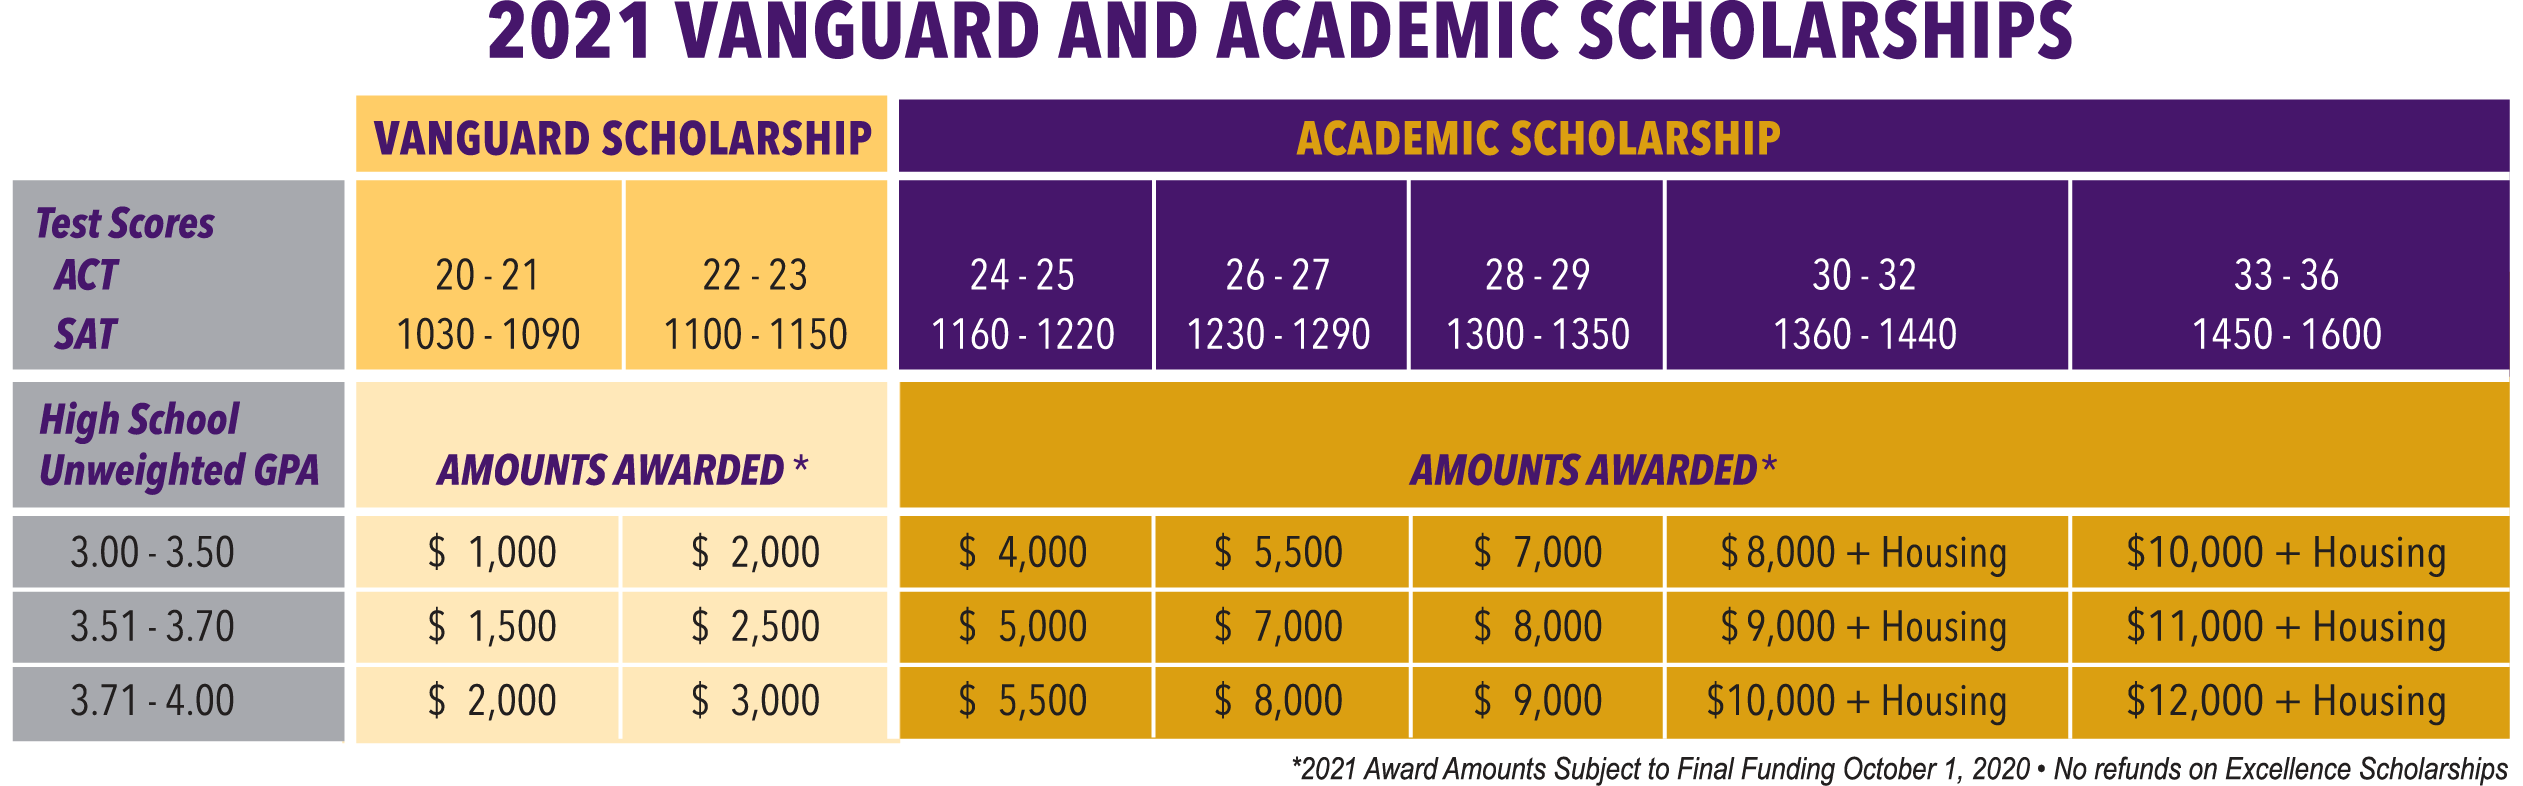 Wayne State Scholarships Chart